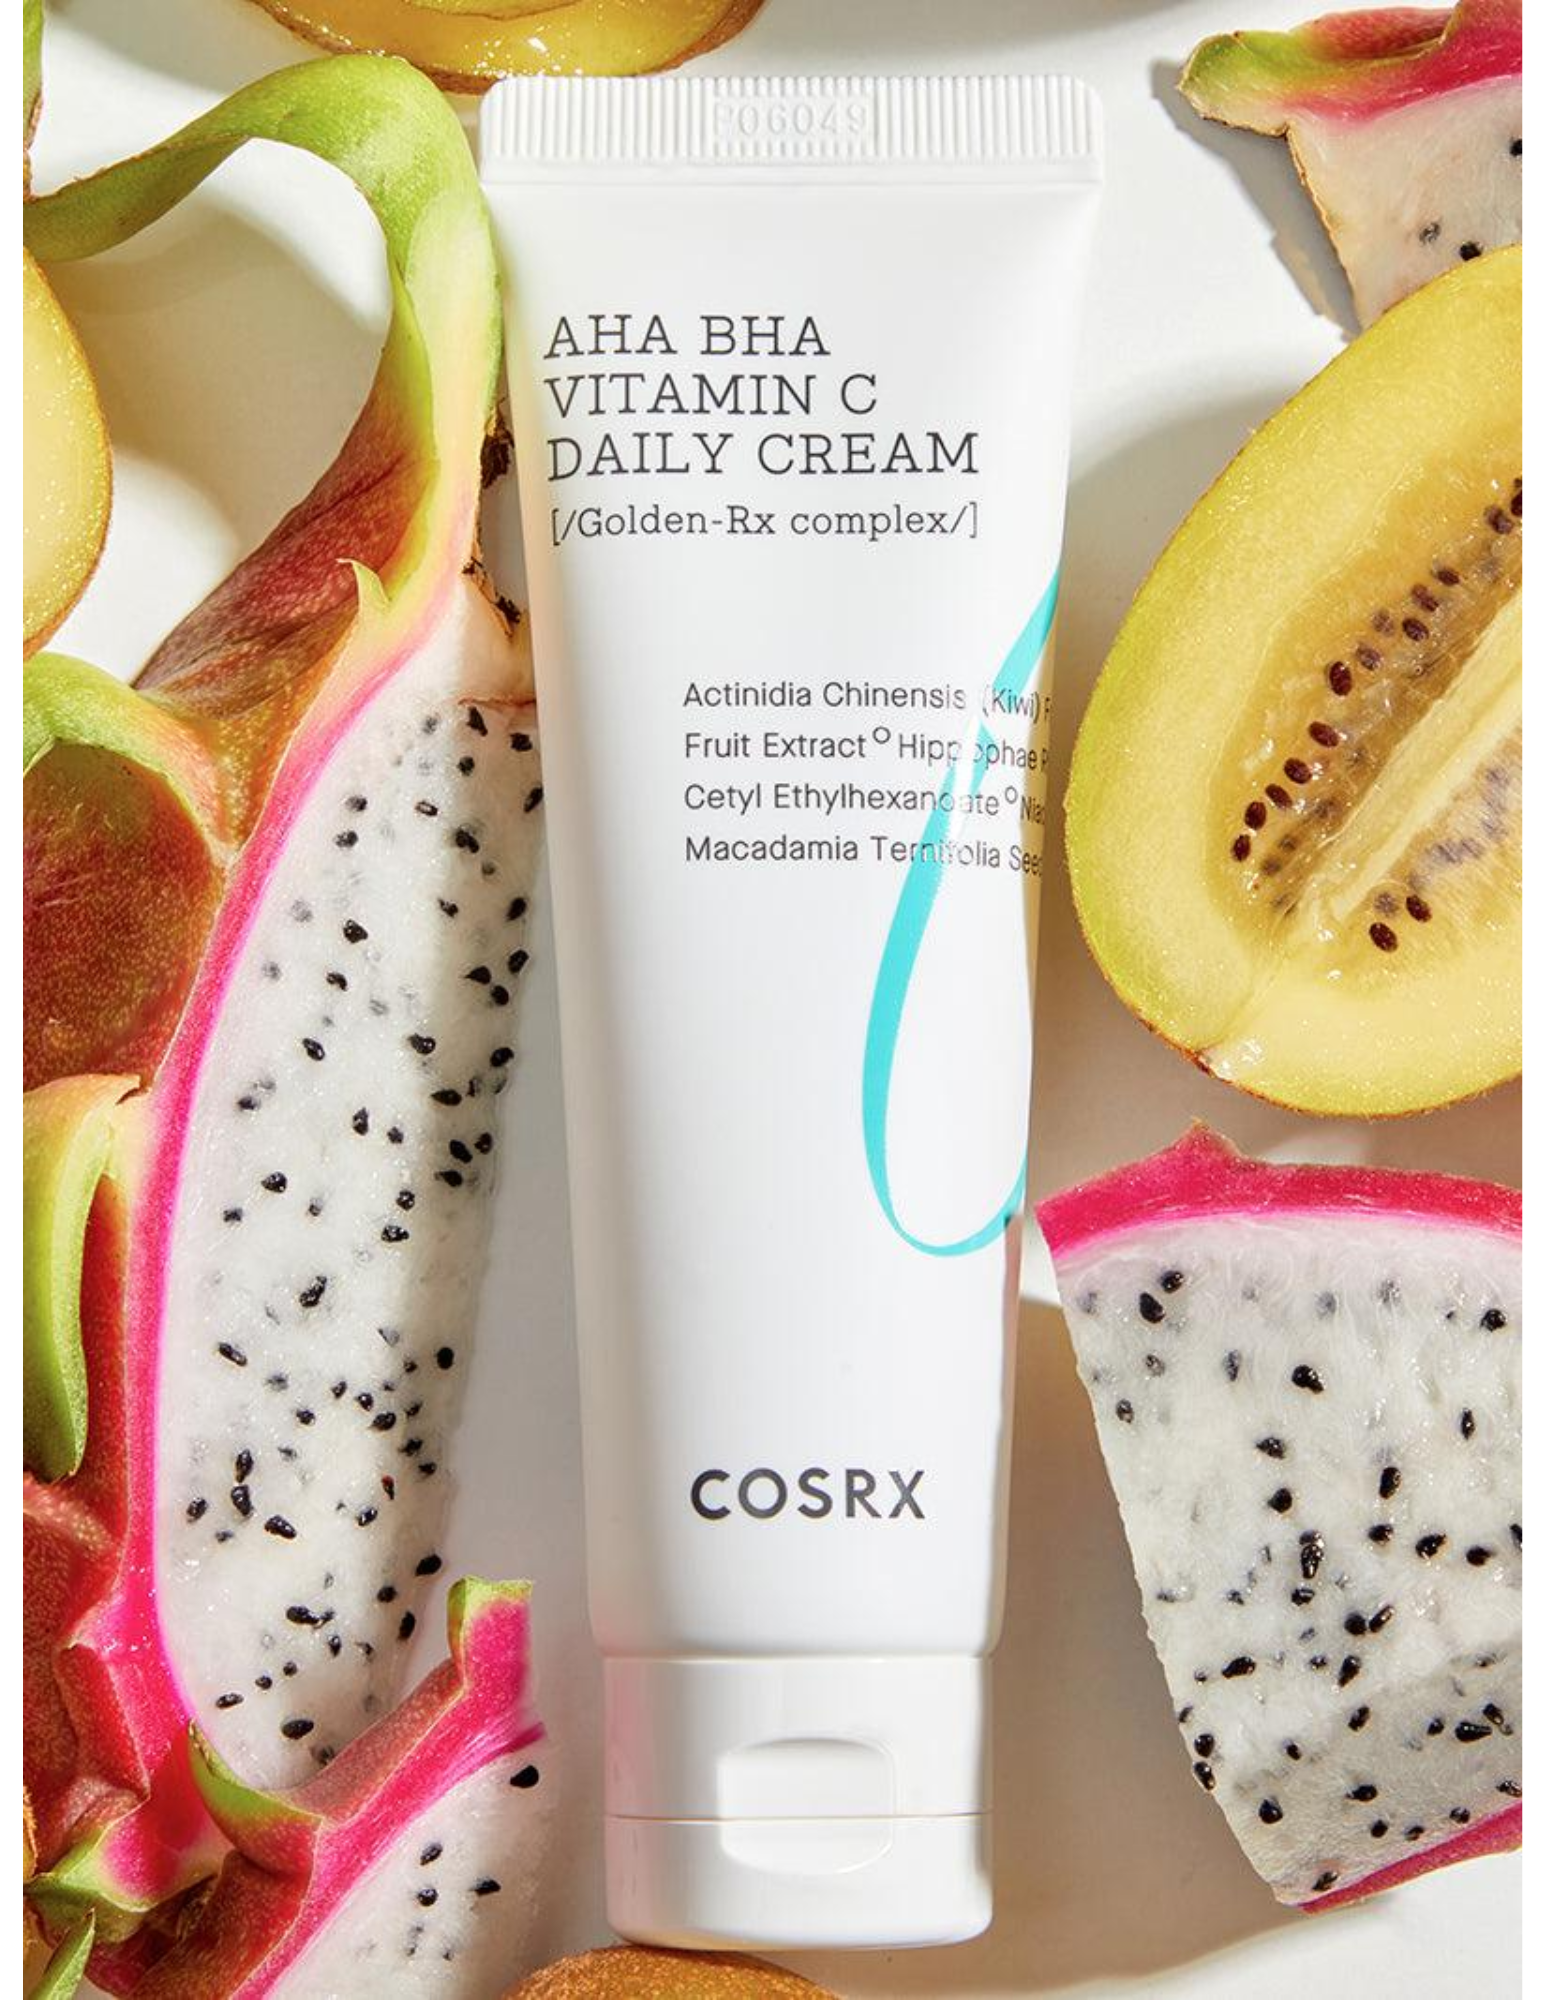 COSRX Refresh AHA BHA Vitamin C Daily Cream